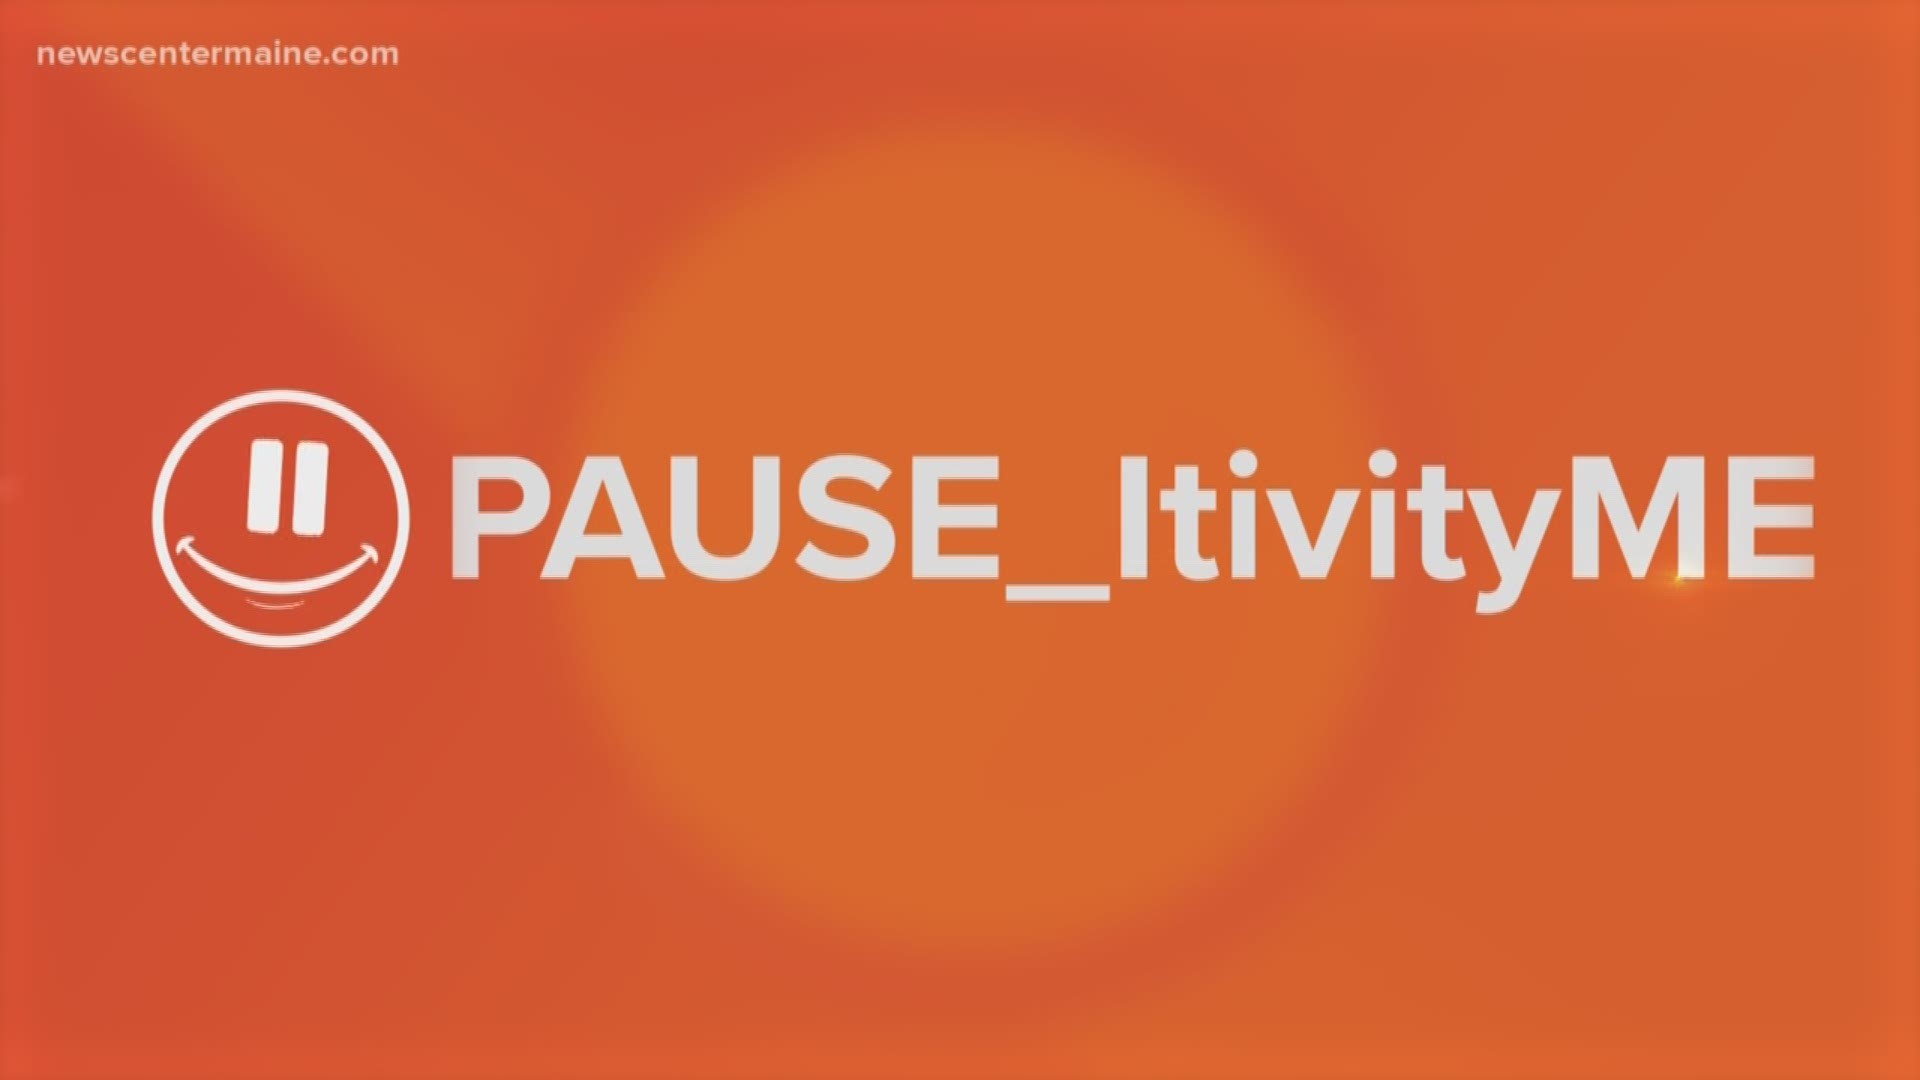 Pause_ItivityME